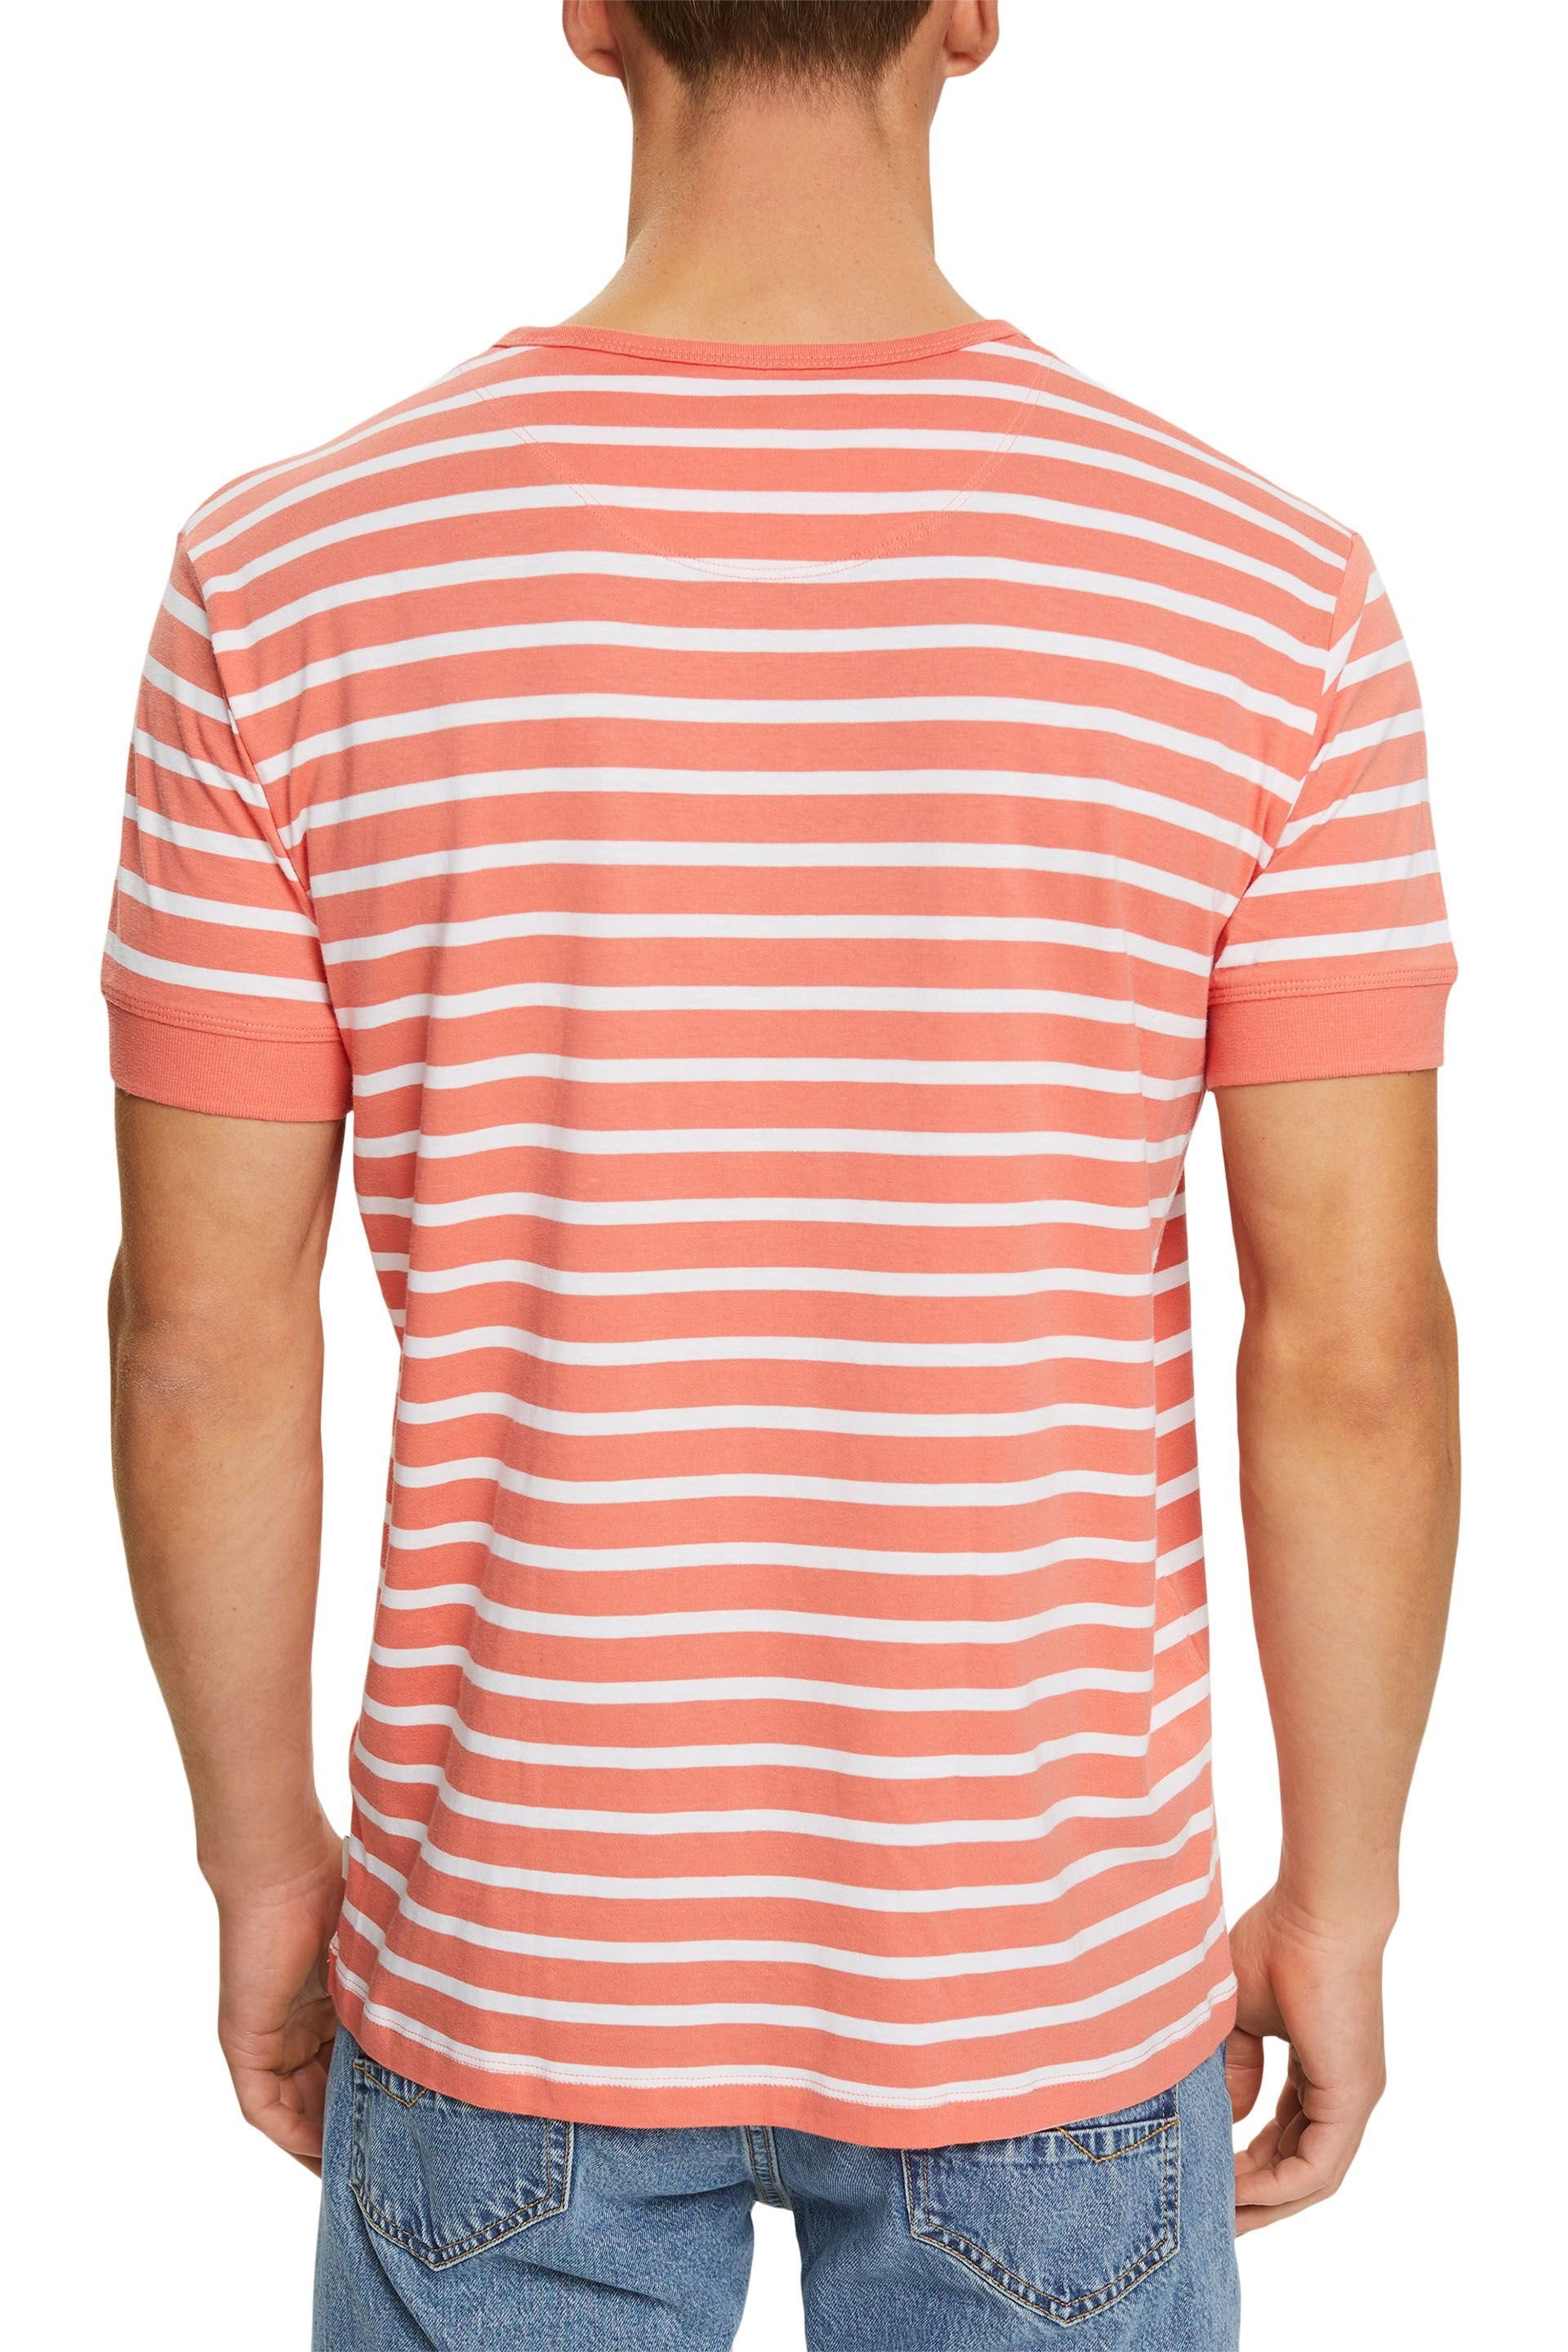 T-Shirt Esprit coral